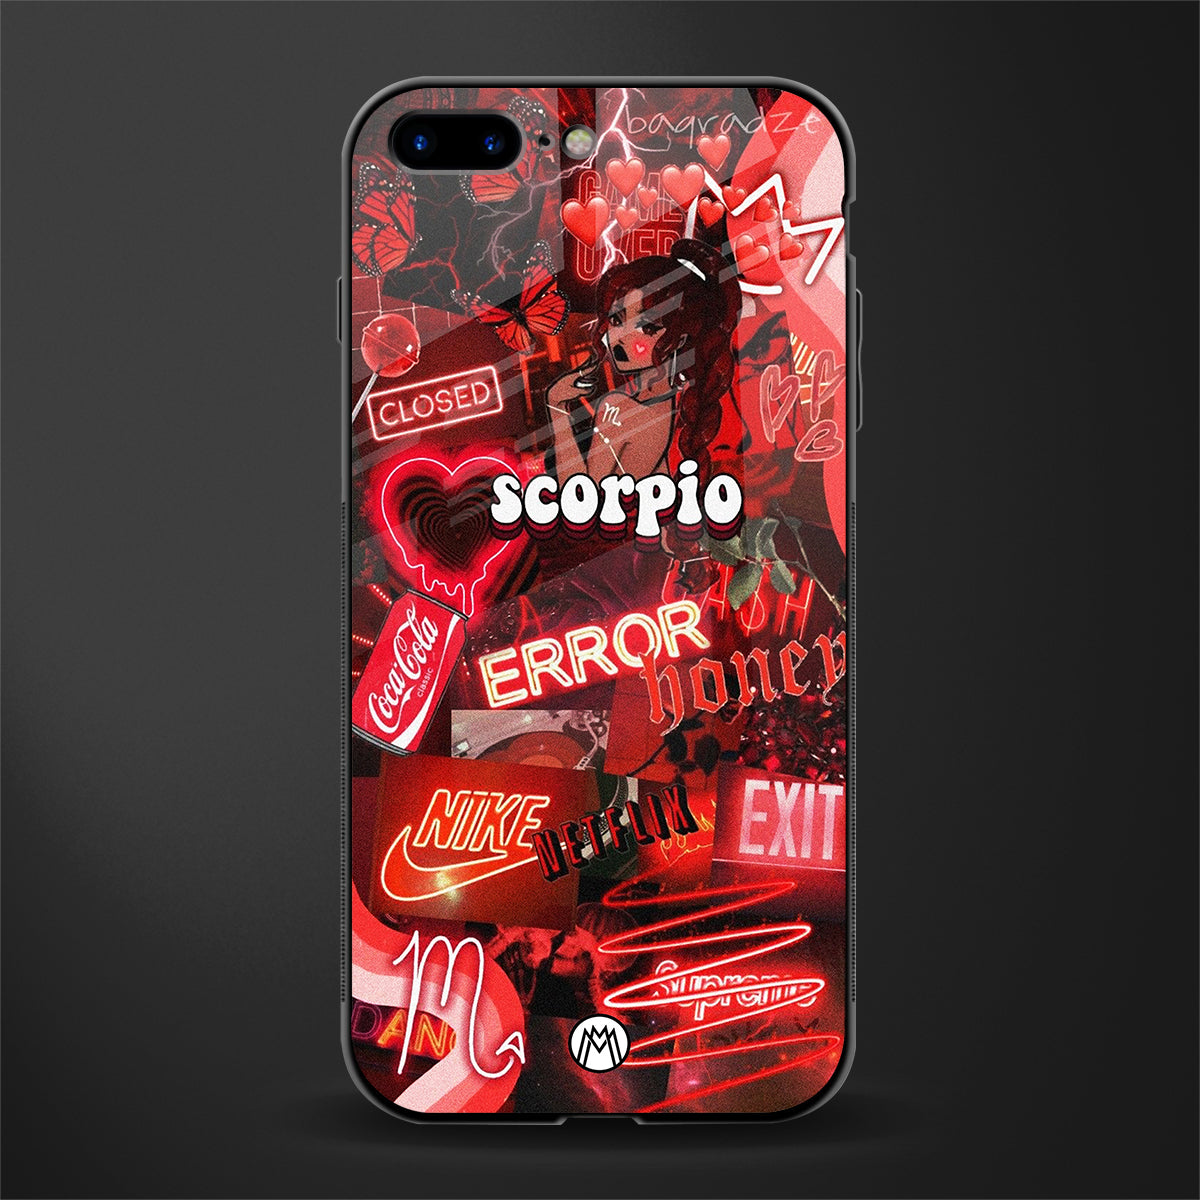 scorpio aesthetic collage glass case for iphone 8 plus image